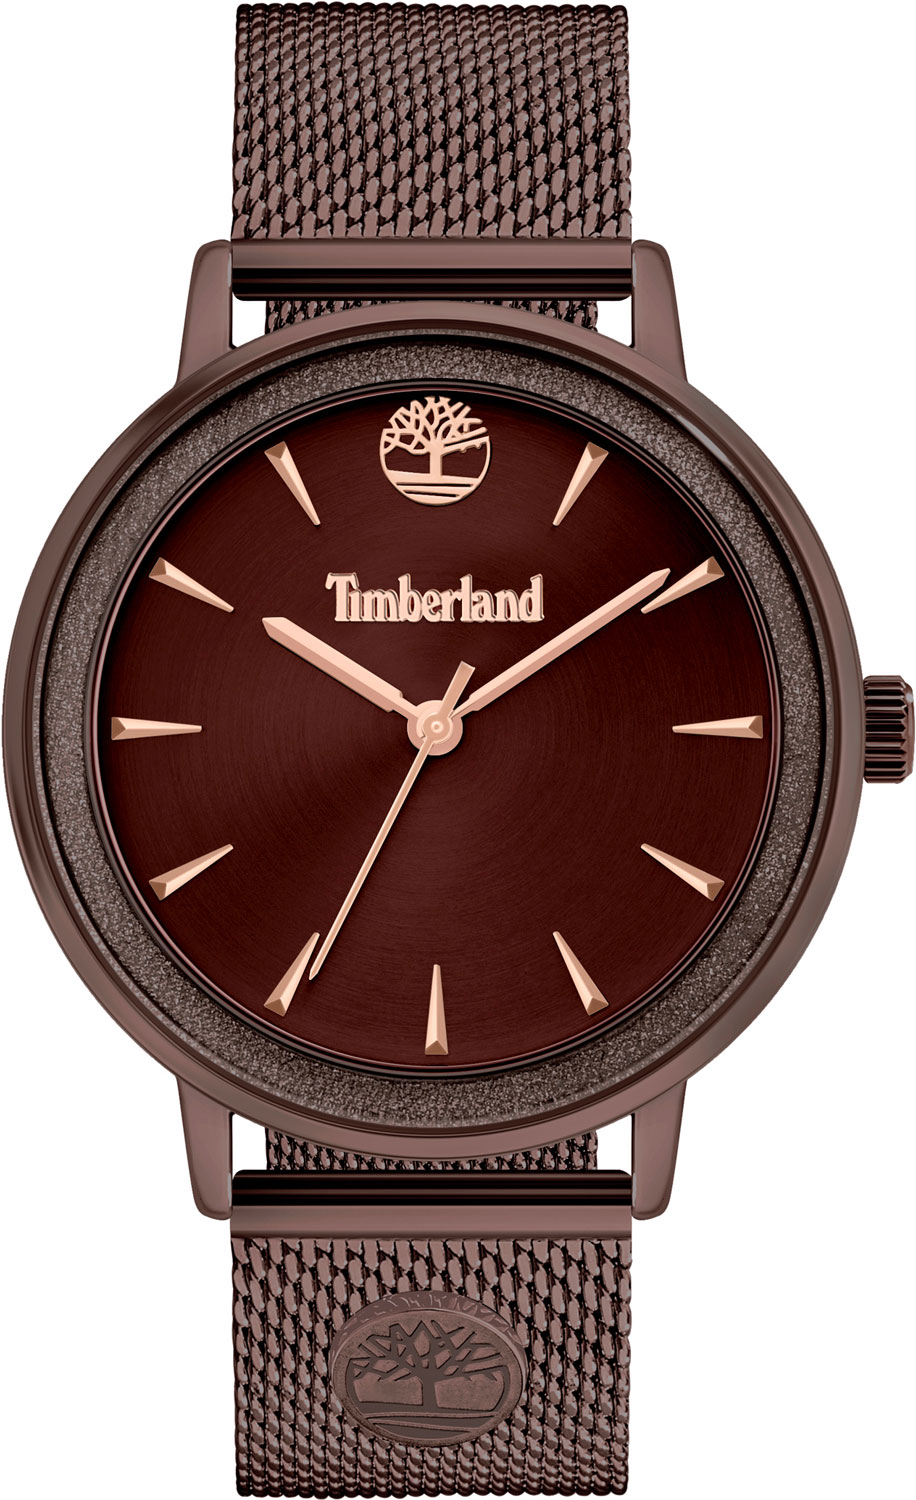 Фото - Женские часы Timberland TBL.15961MYBN/12MM женские часы timberland tbl 15960mytr 79